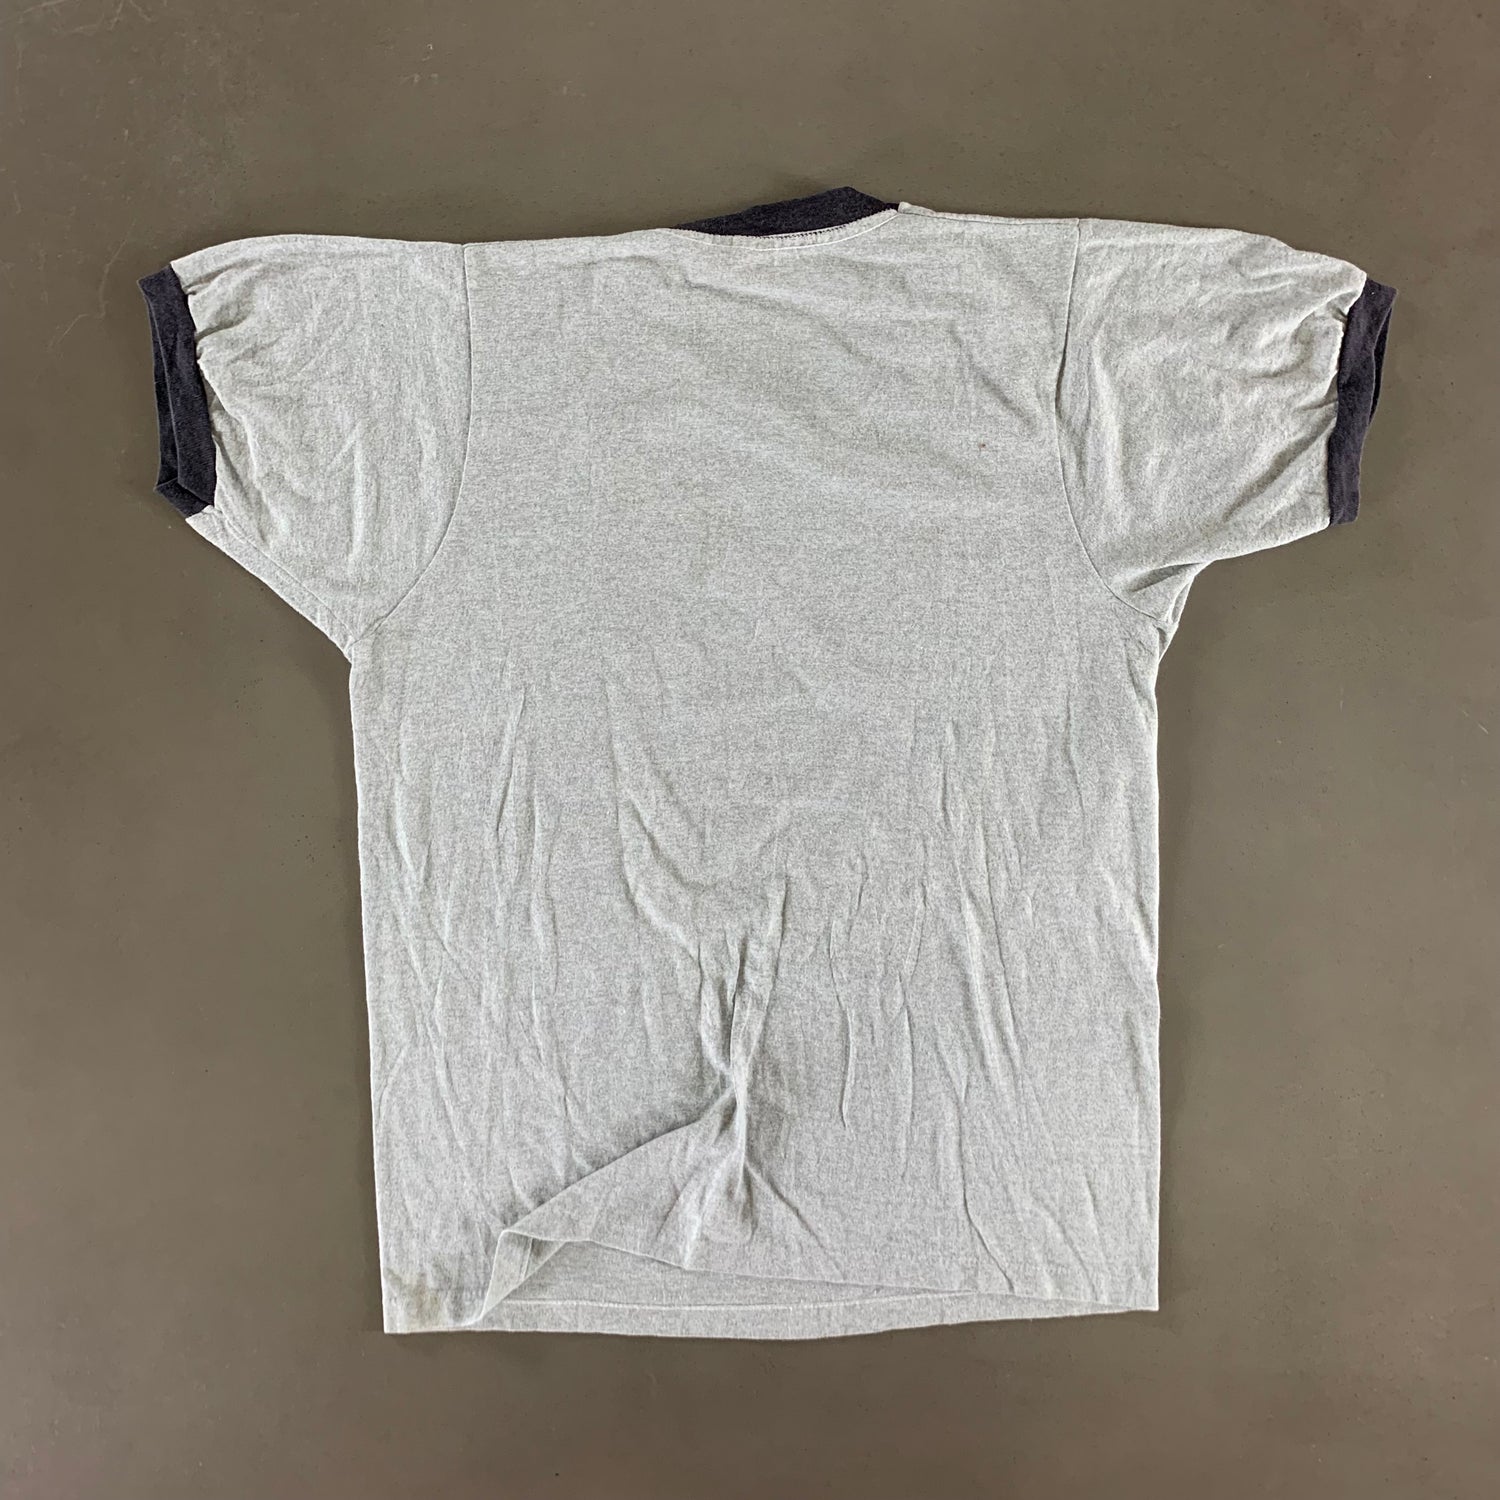 Vintage 1981 Alcatraz T-shirt size Large